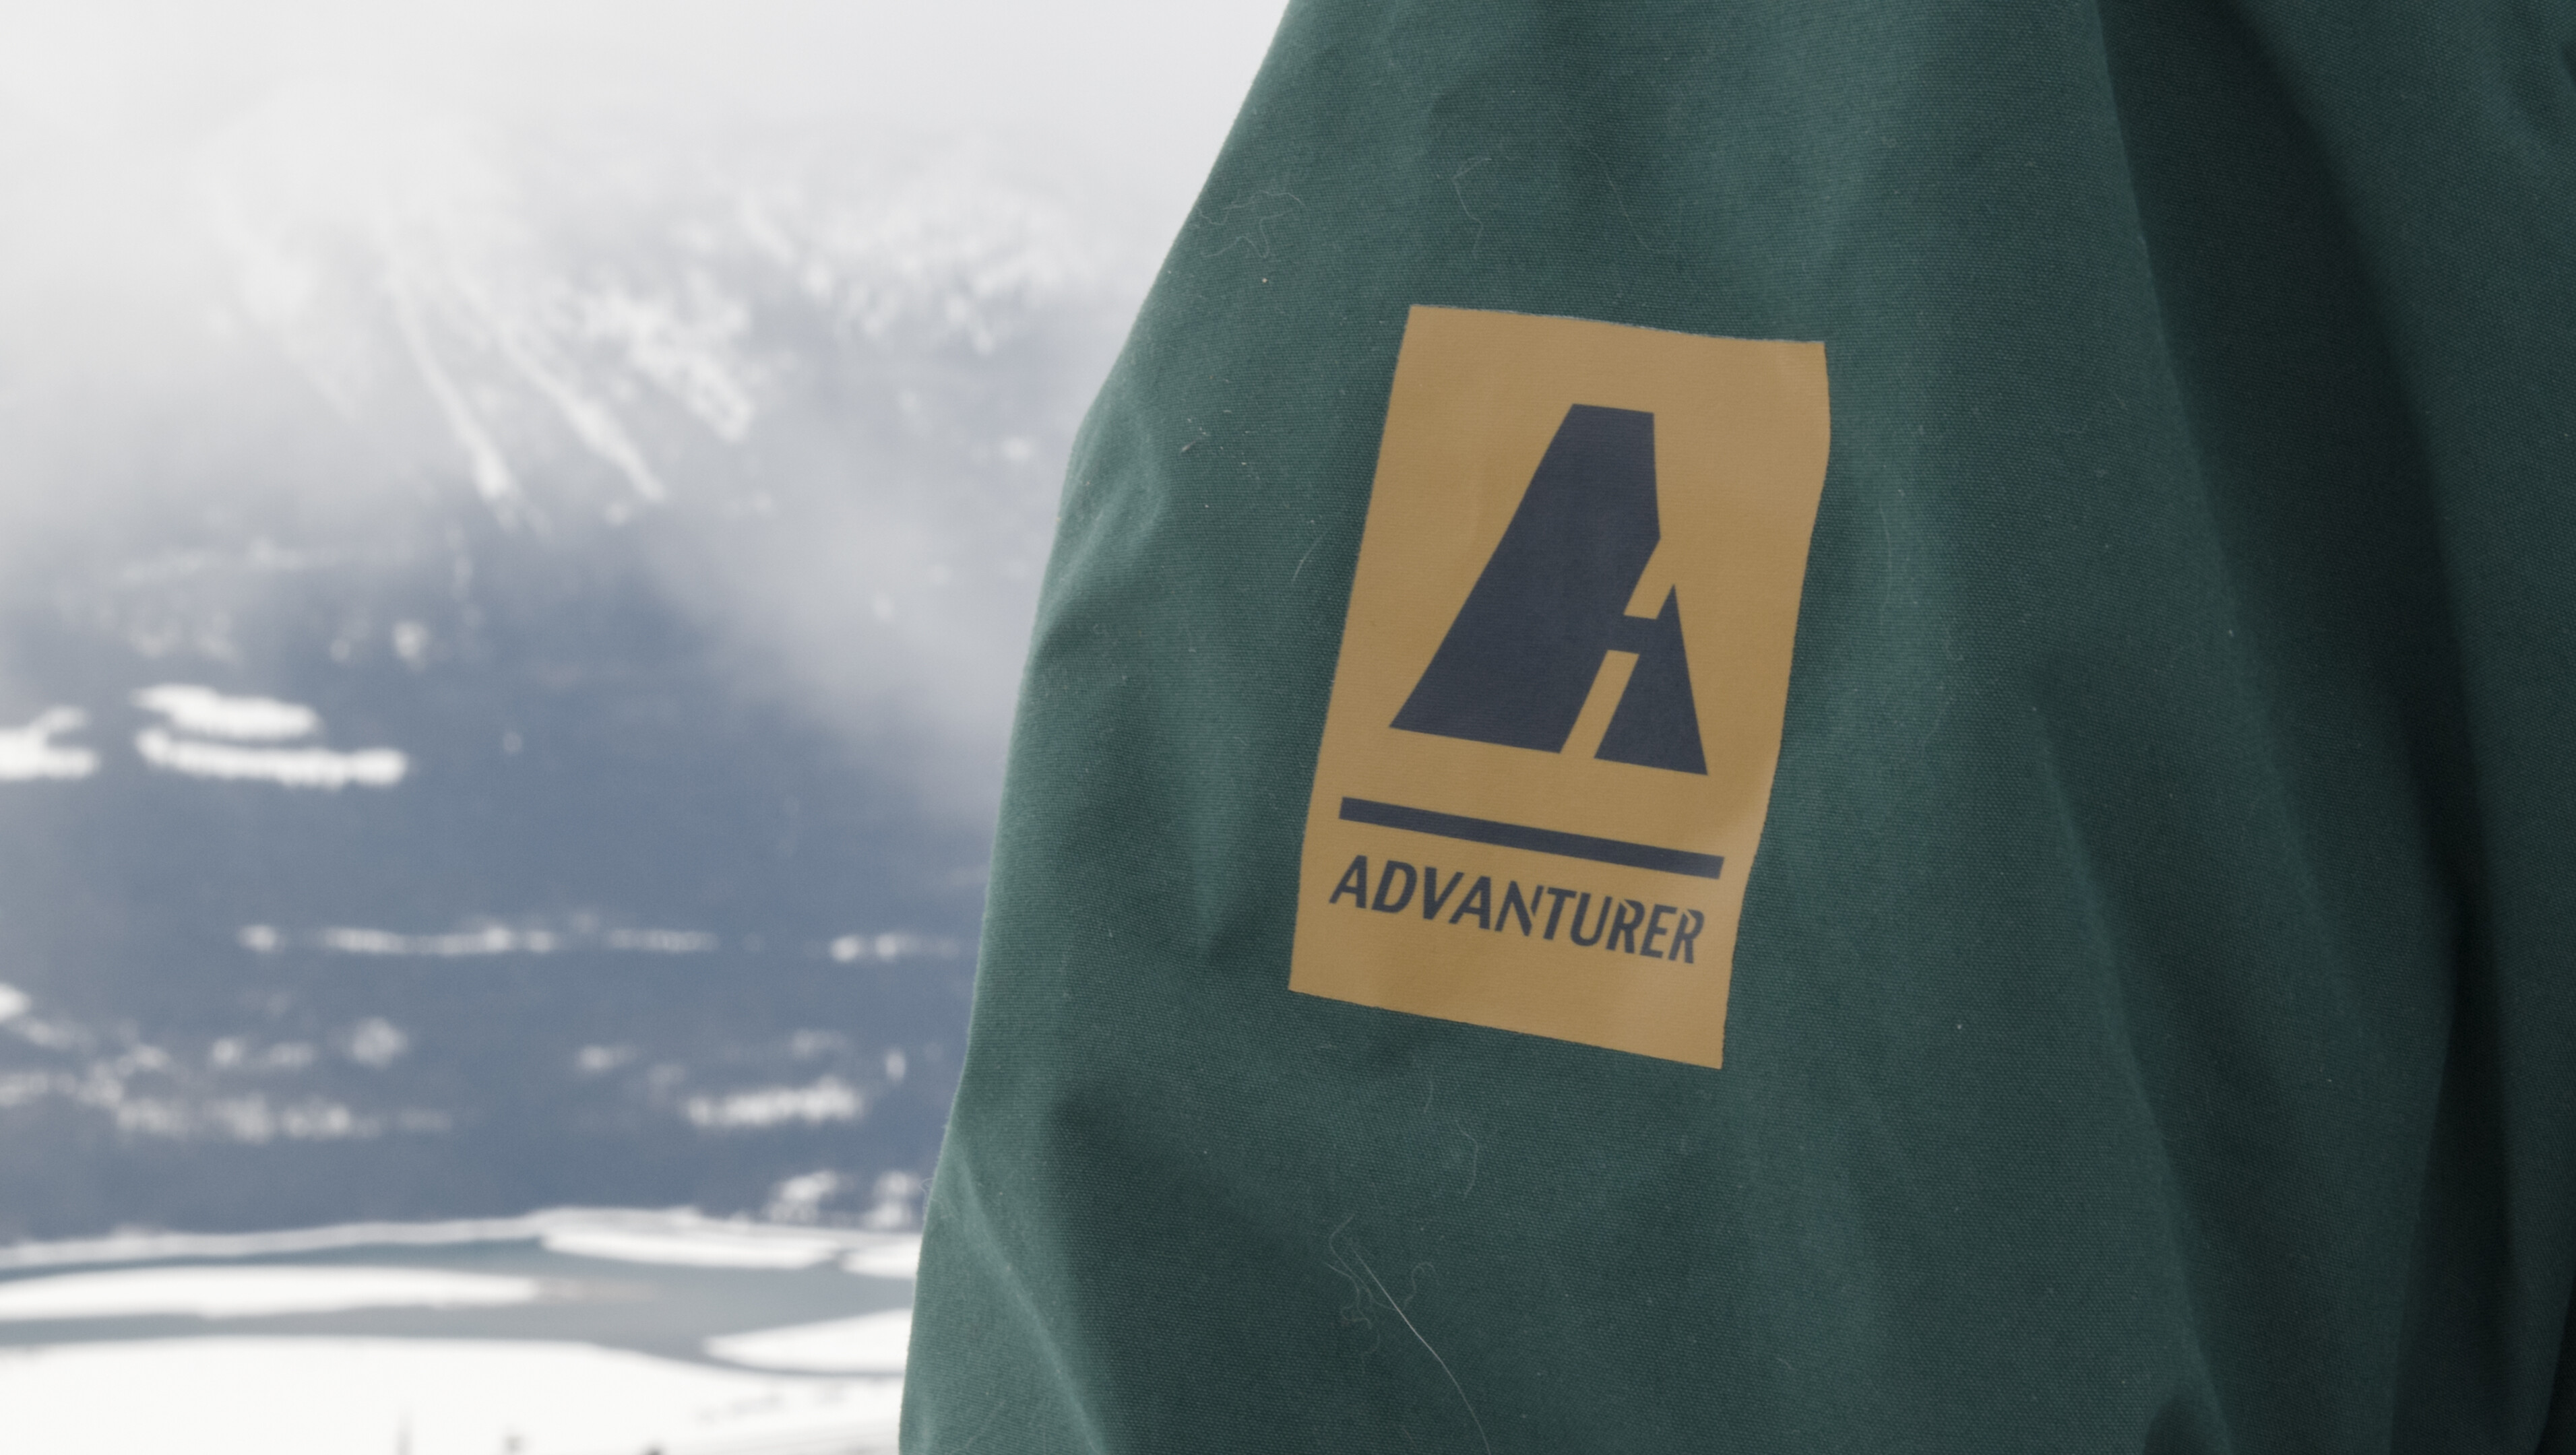 The Advanturer logo on a piece of clothing